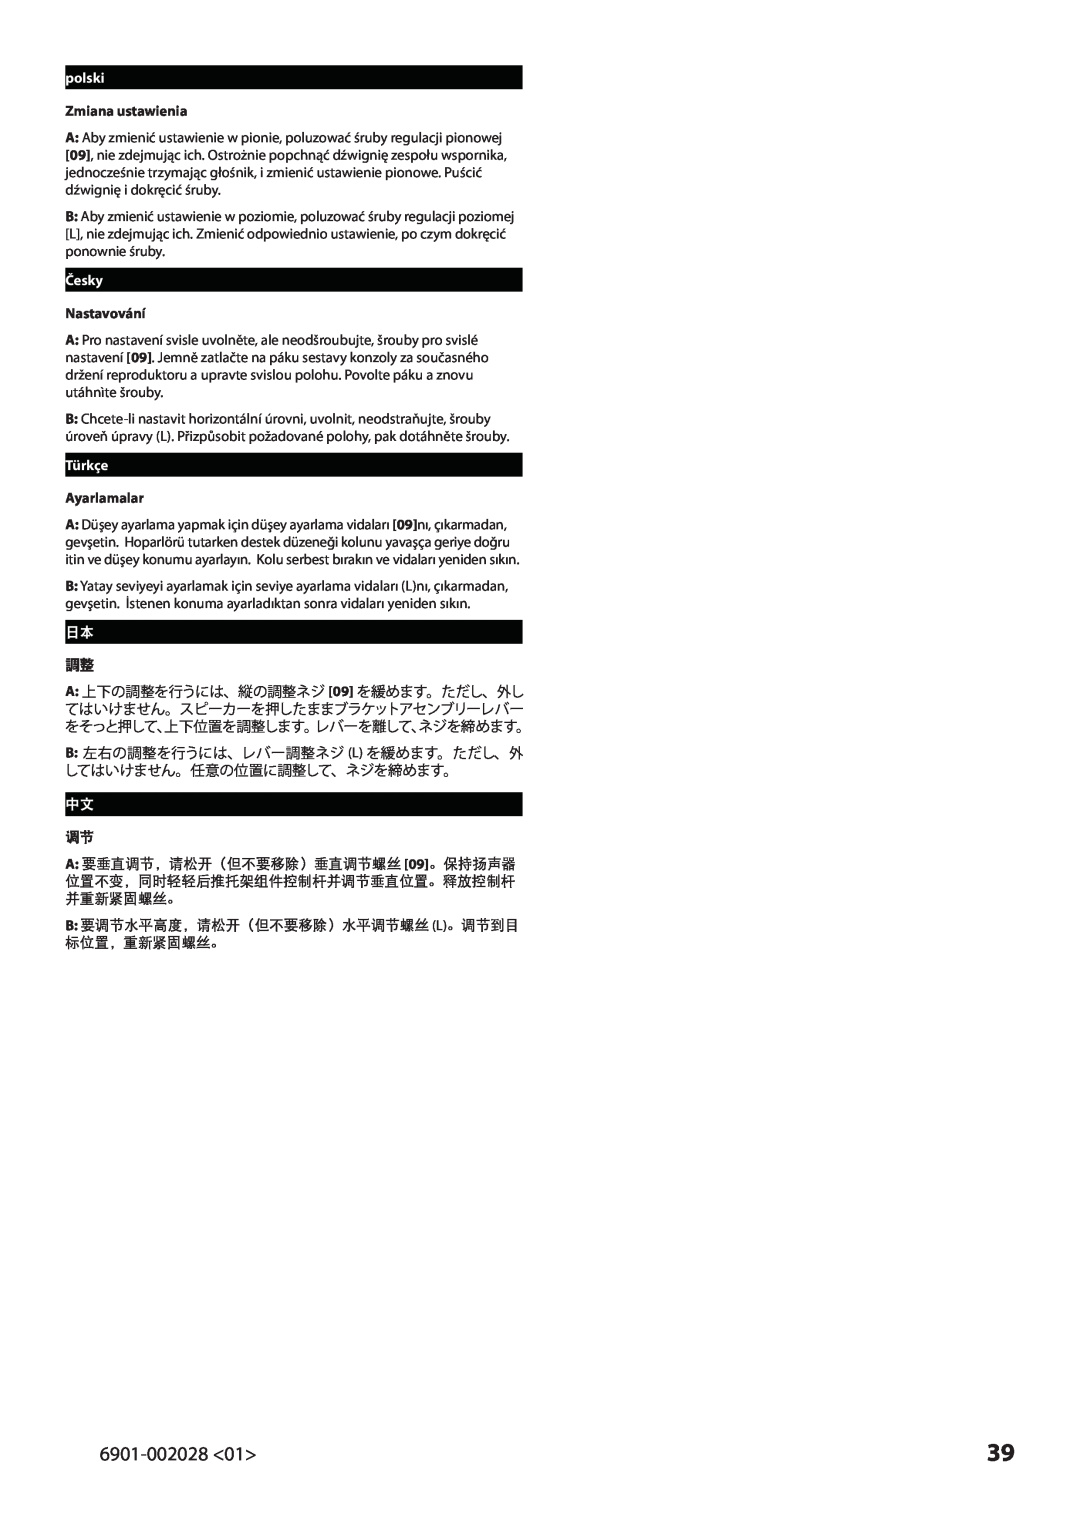 Sanus Systems VMA202 manual 6901-002028, Zmiana ustawienia, Nastavování, Ayarlamalar 